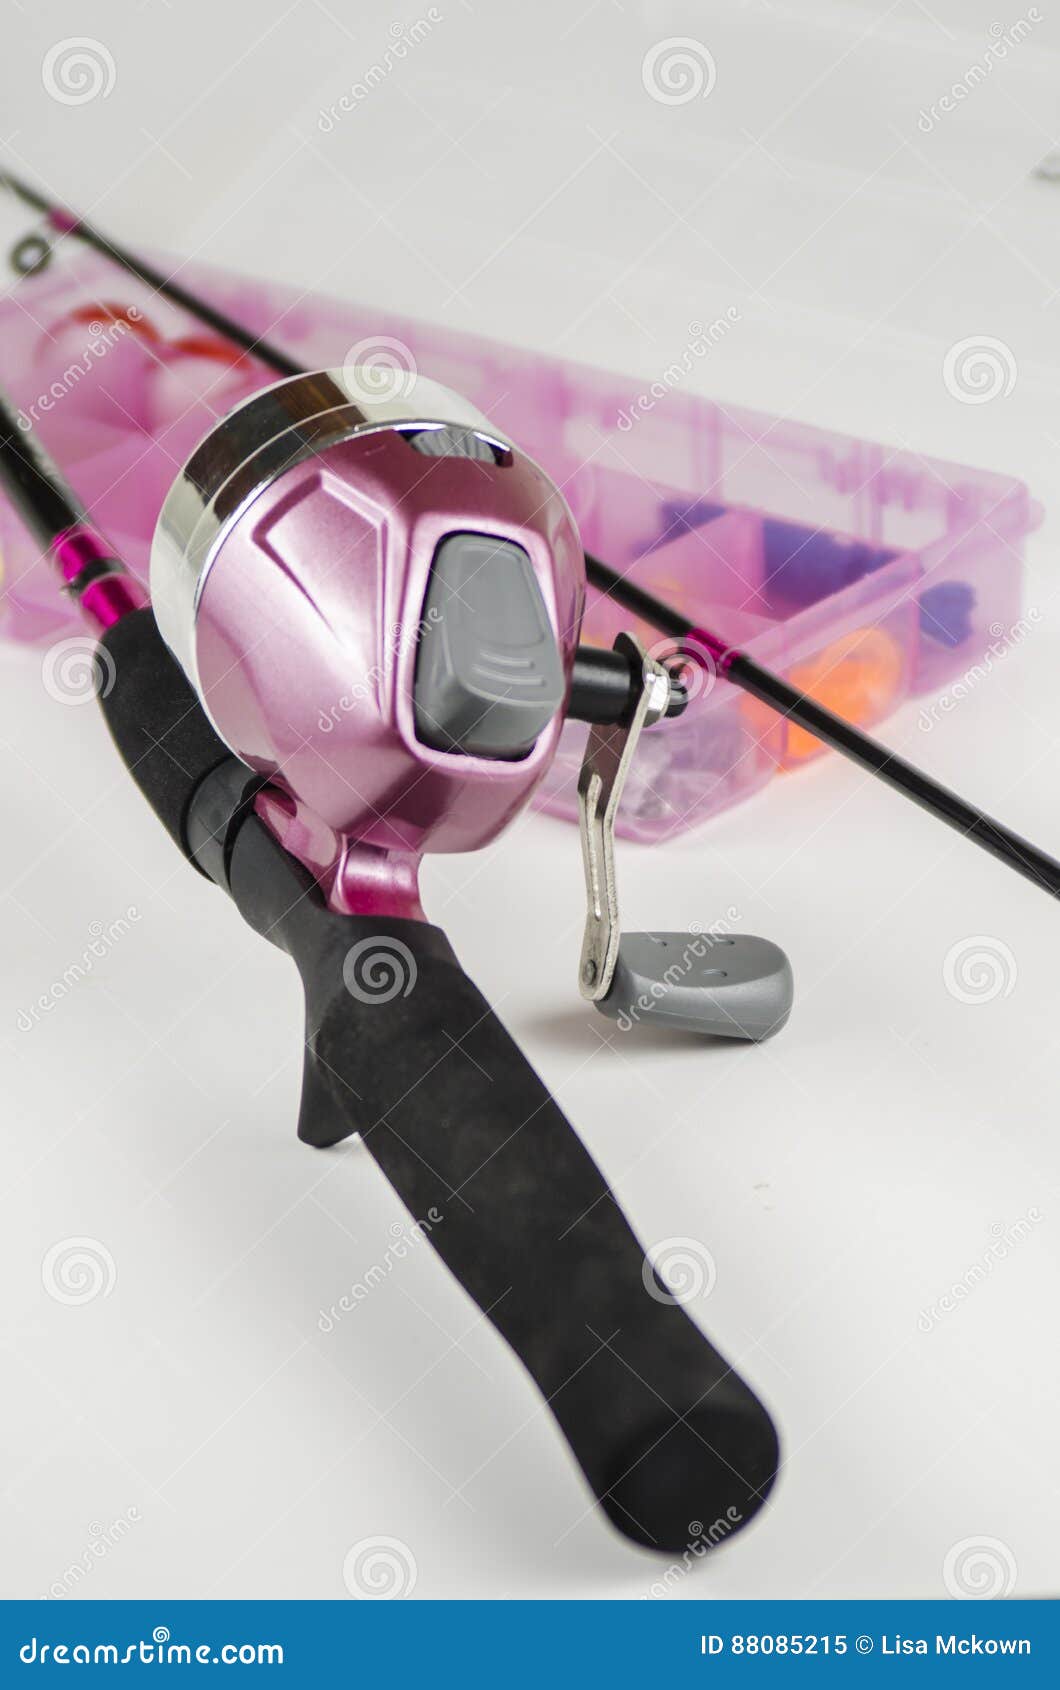 Pink Fishing Pole stock image. Image of recreational - 88085215